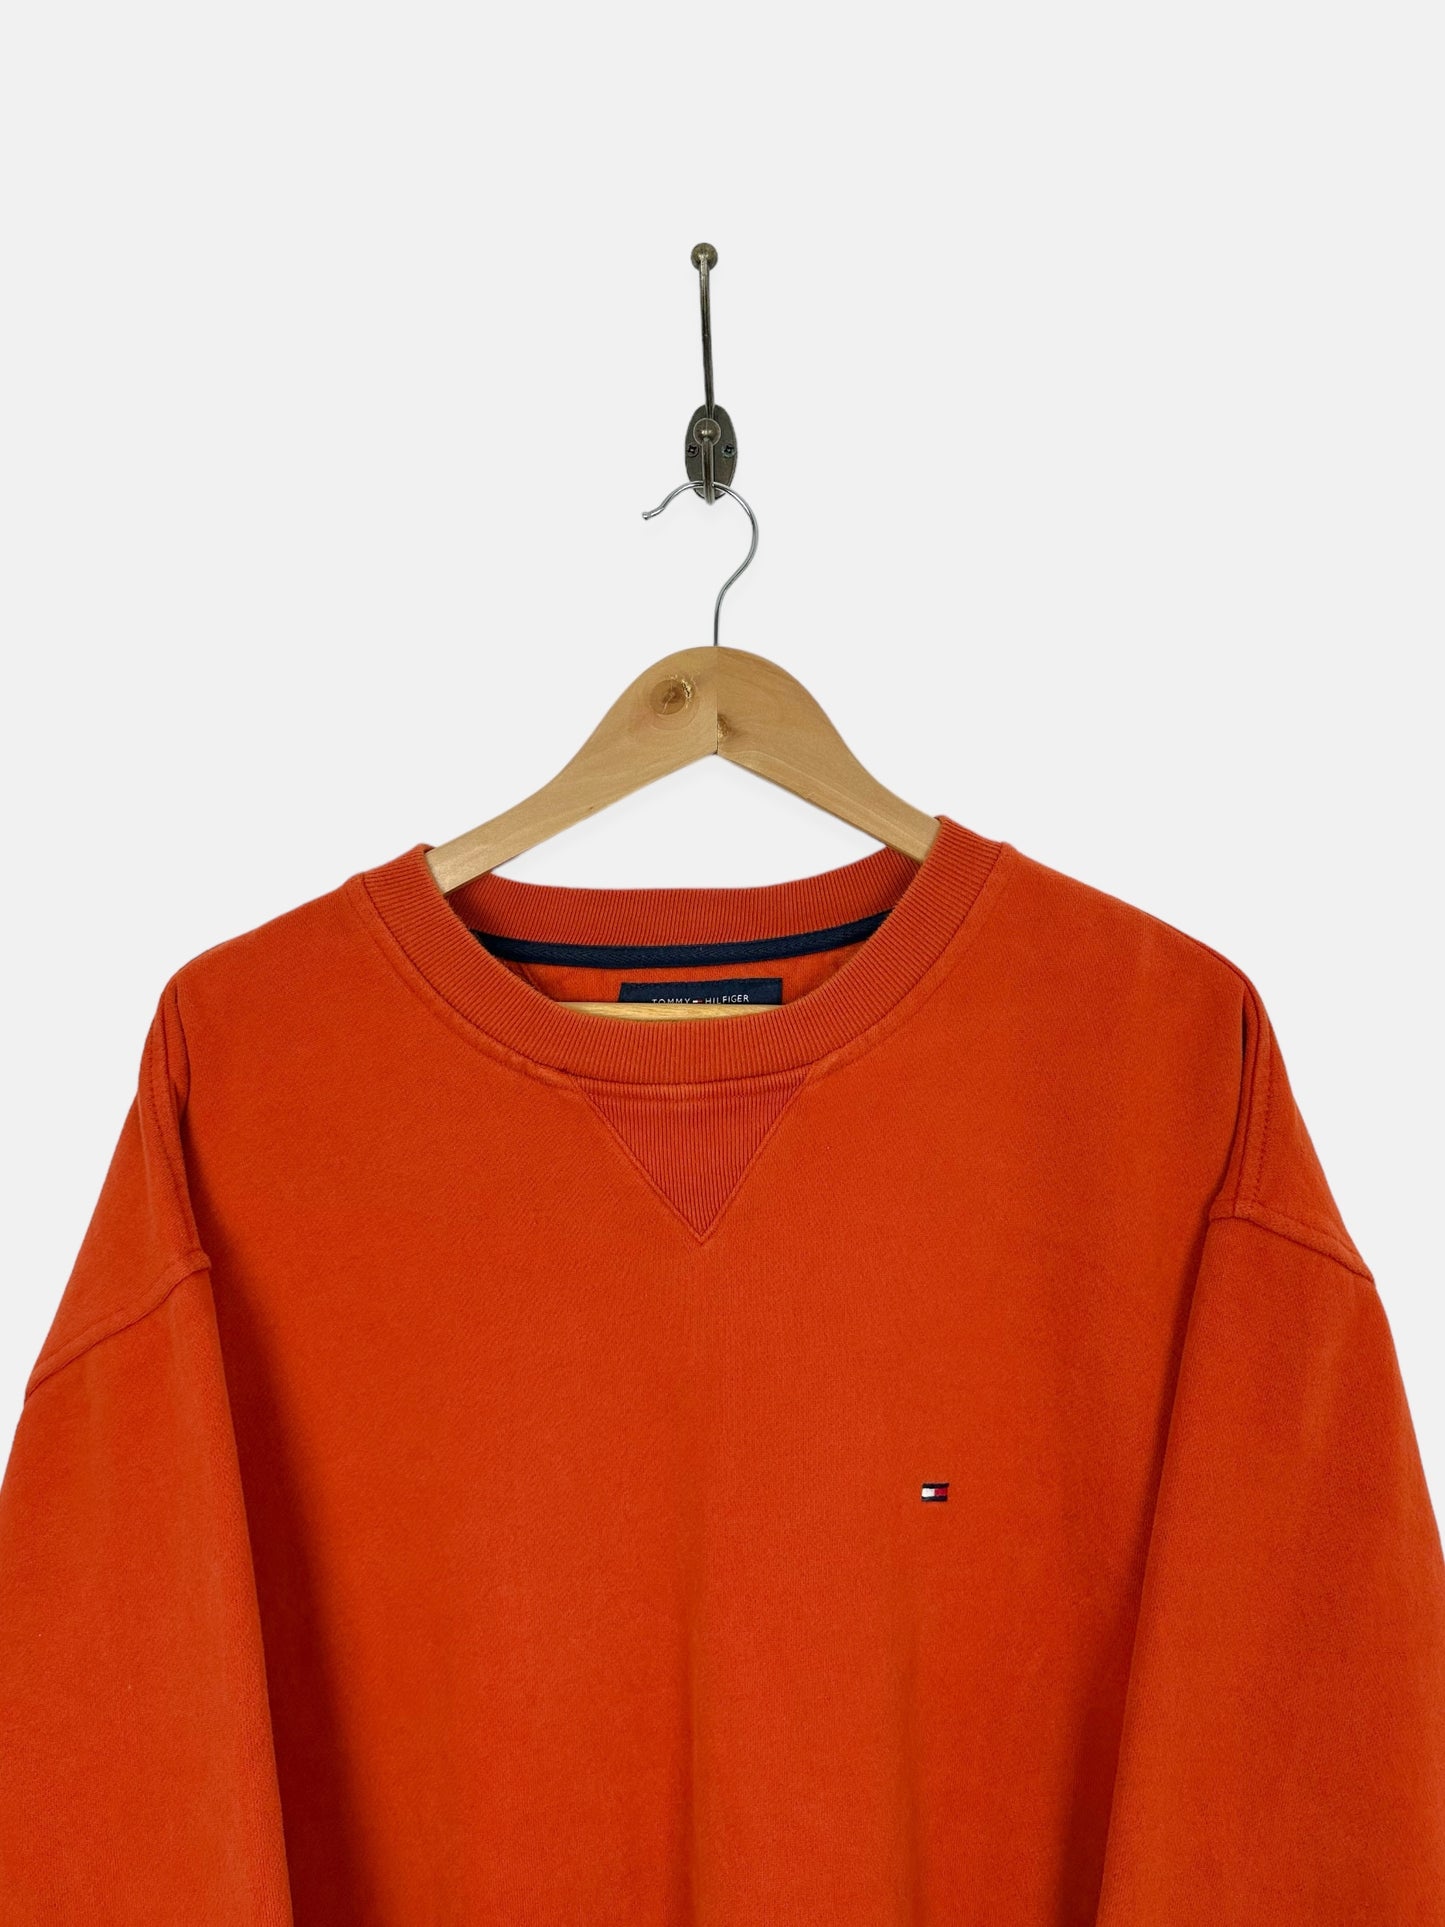 90's Tommy Hilfiger Embroidered Vintage Sweatshirt Size L